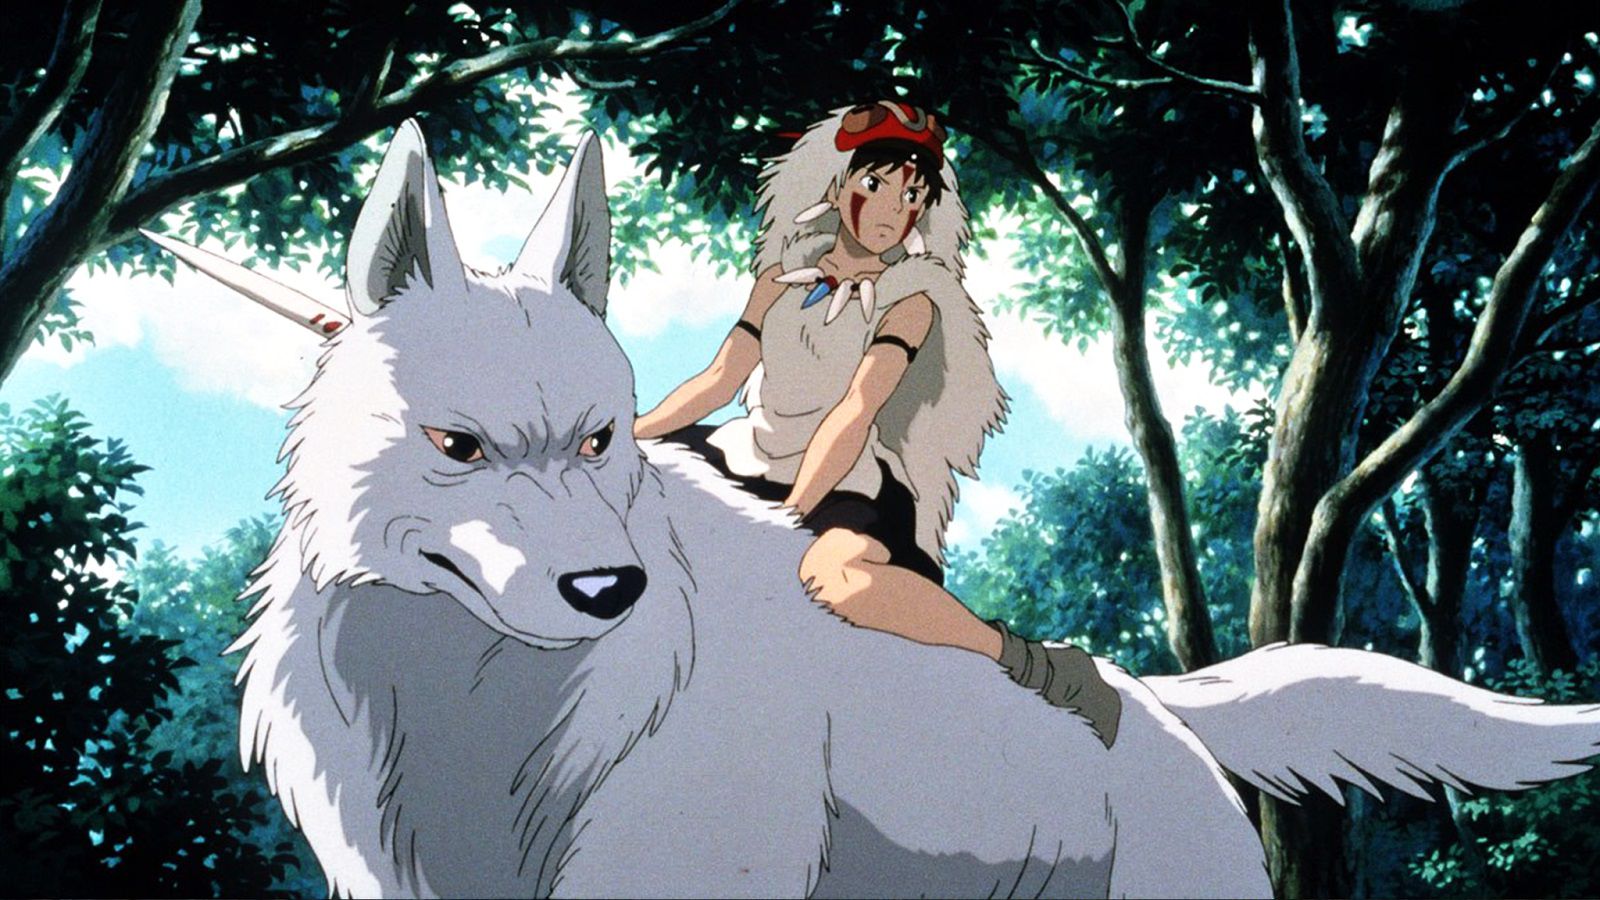 21 filmes do Studio Ghibli vão ficar disponíveis na Netflix